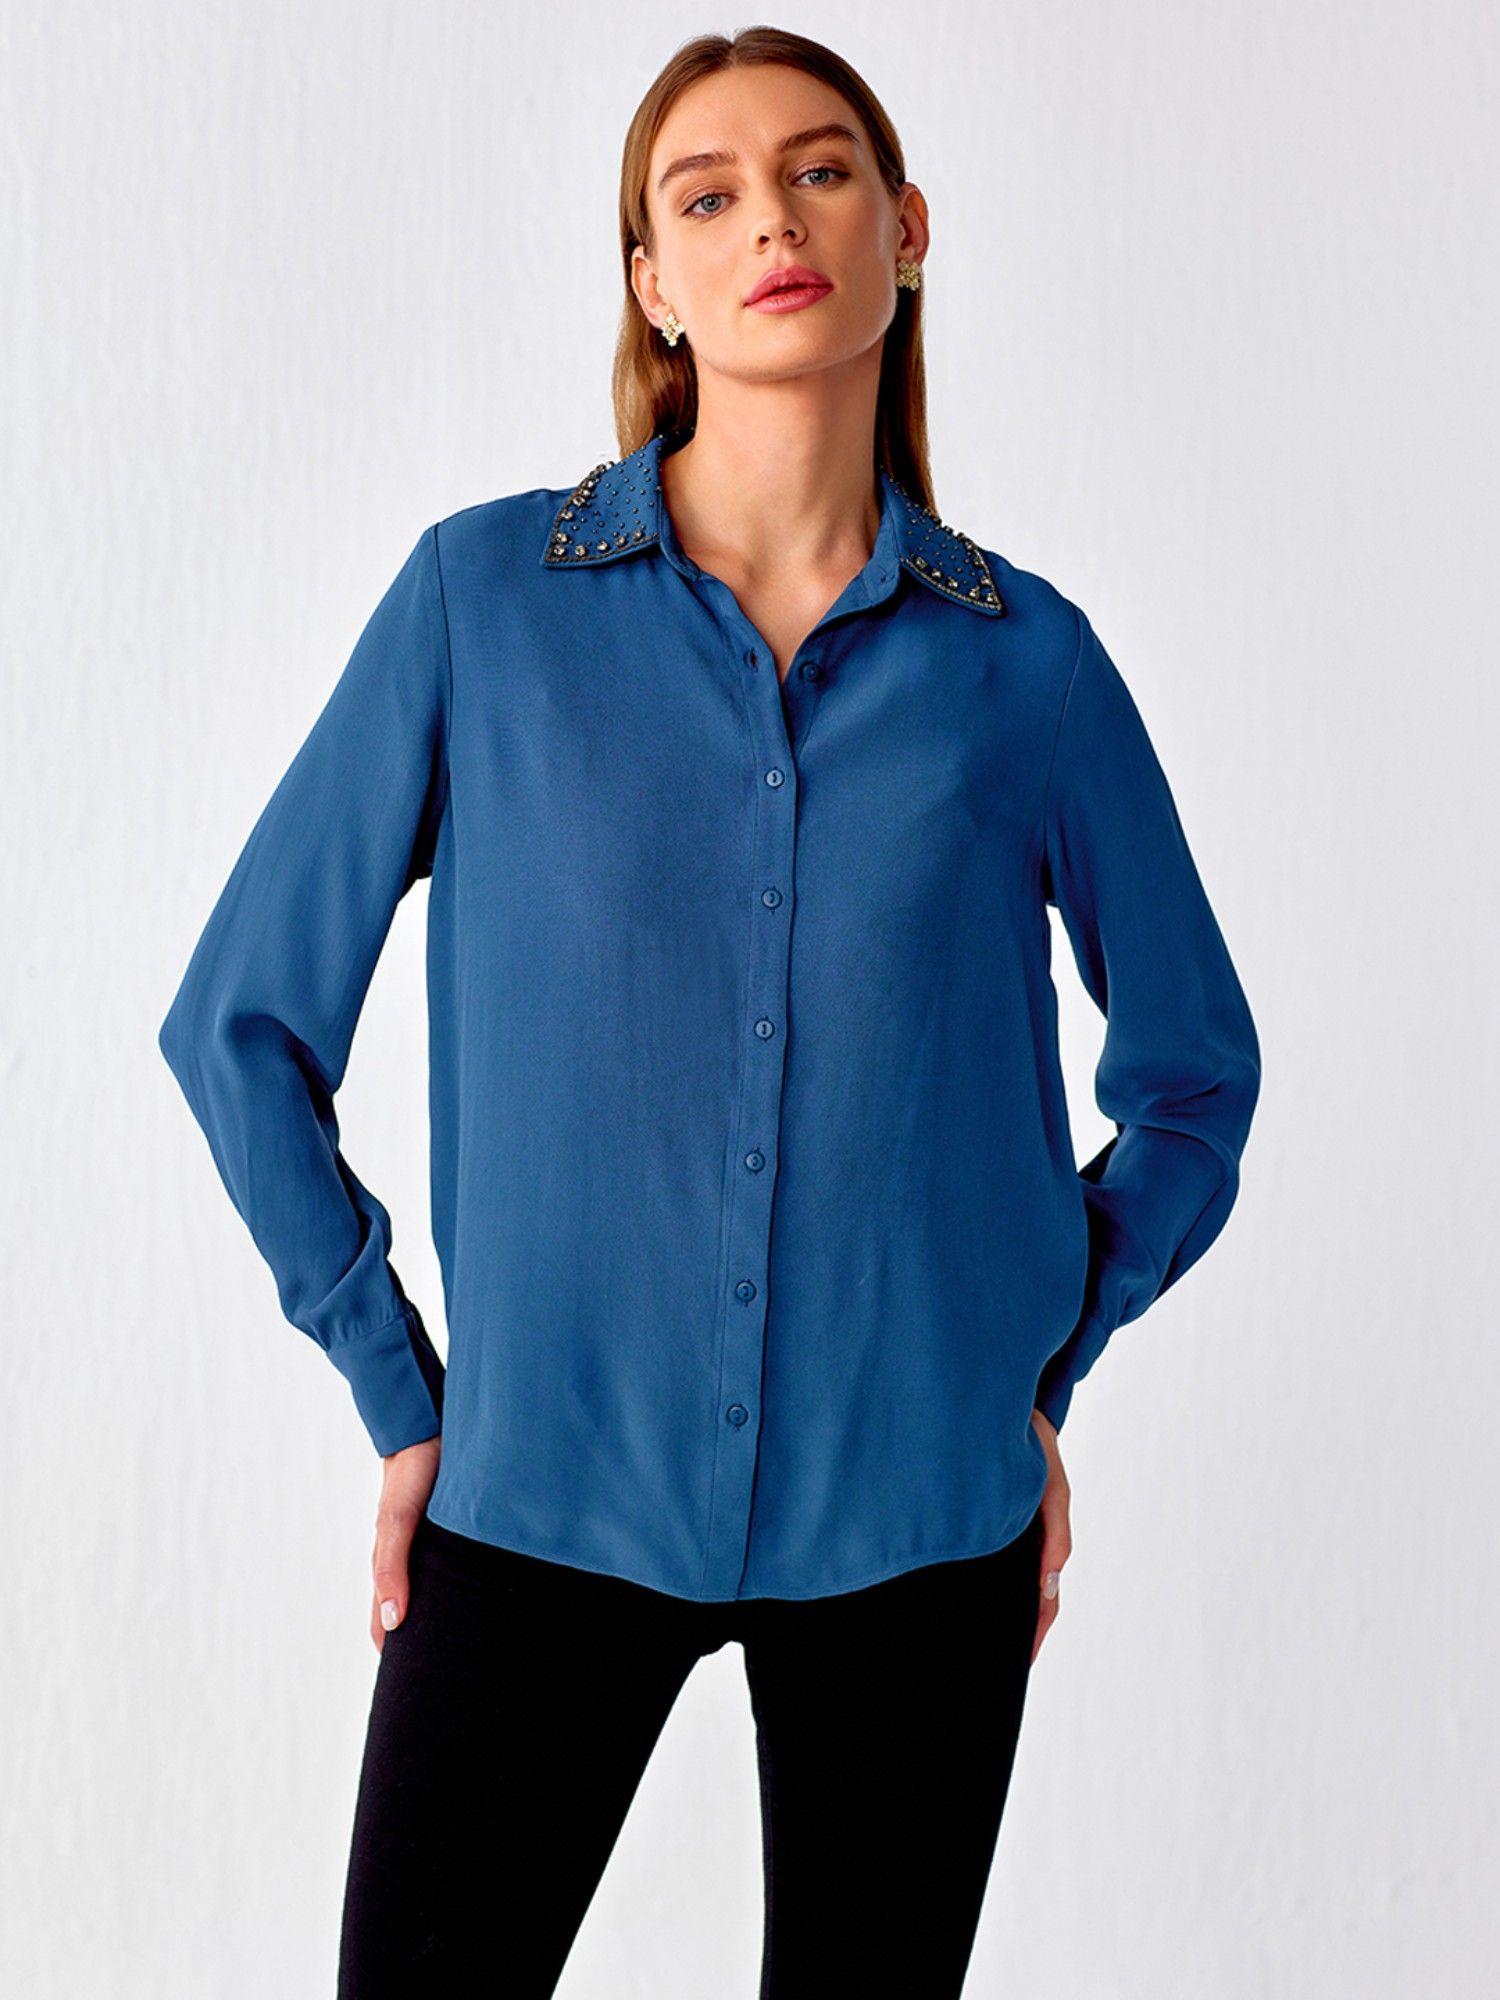 blue collared shirt